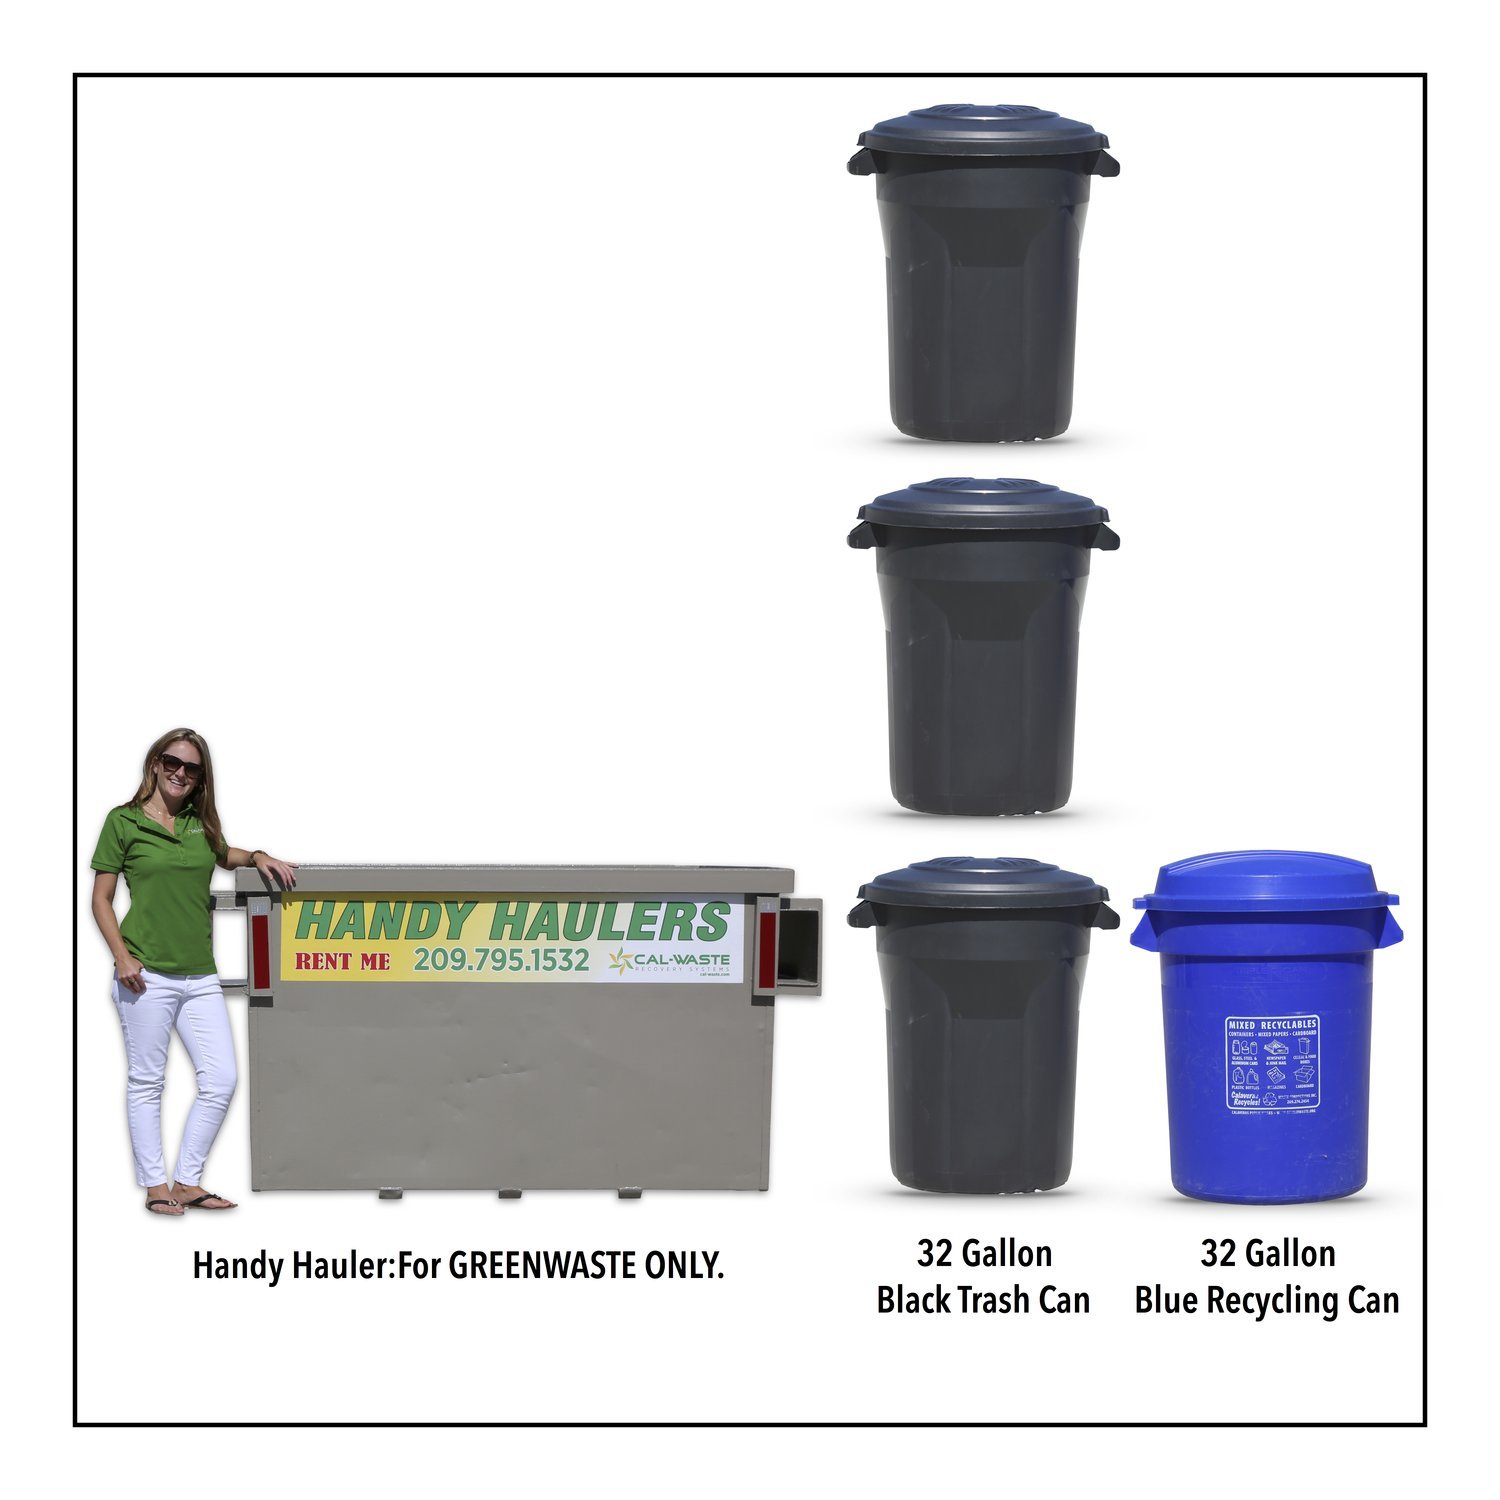 Cal-Waste CAN Service - Three 32 Gallon Trash & Recycling, Yearly Yard & Garden Handy Hauler